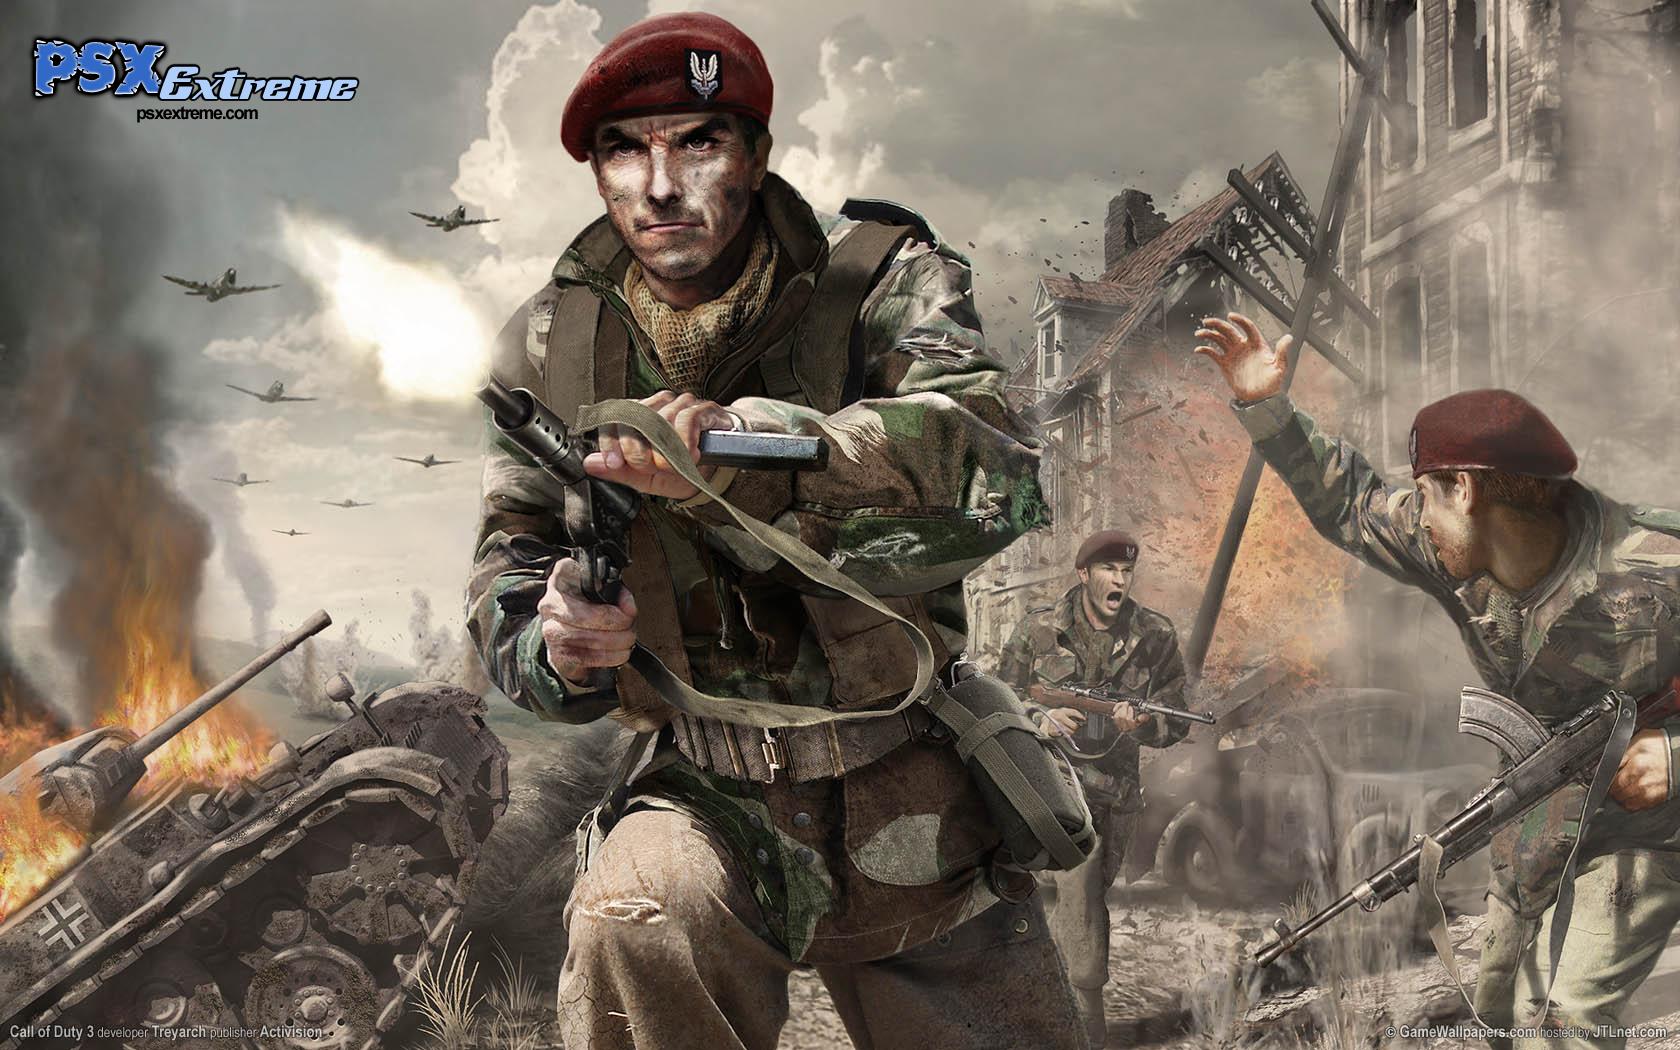 Call Of Duty 3 Wallpaper